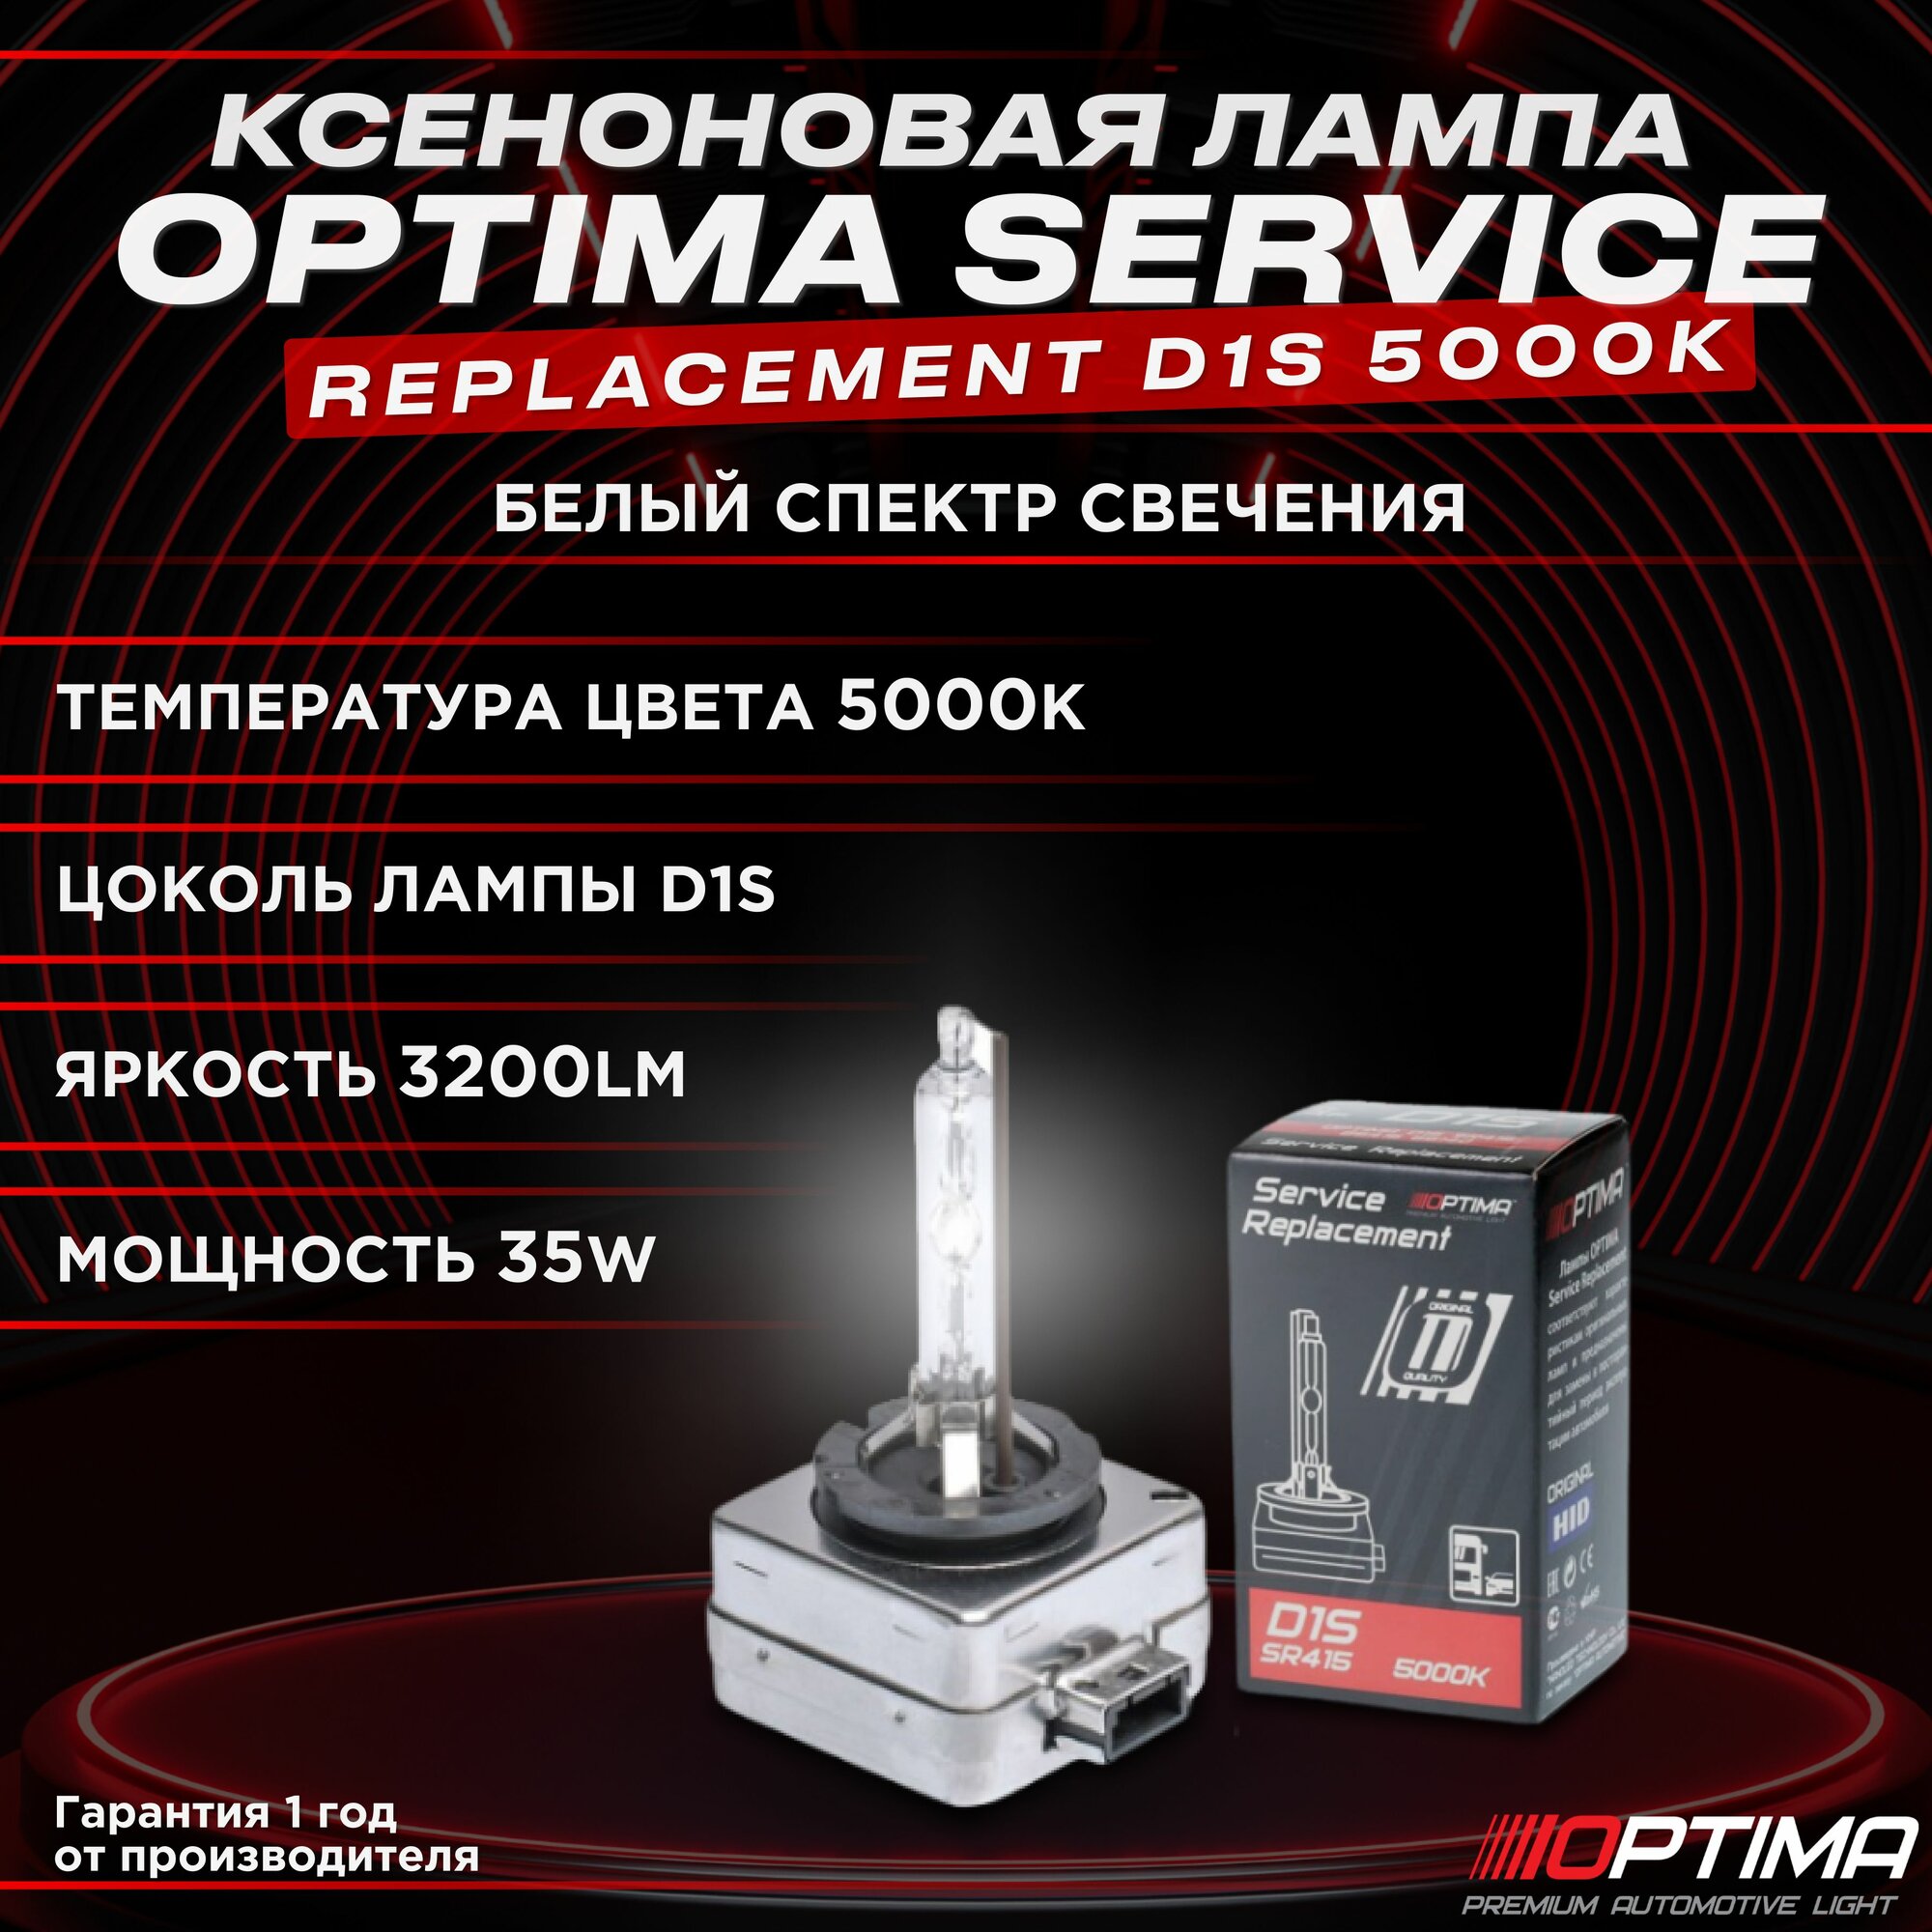 Ксеноновая лампа Optima Service Replacement D1S 5000K - 1 шт.